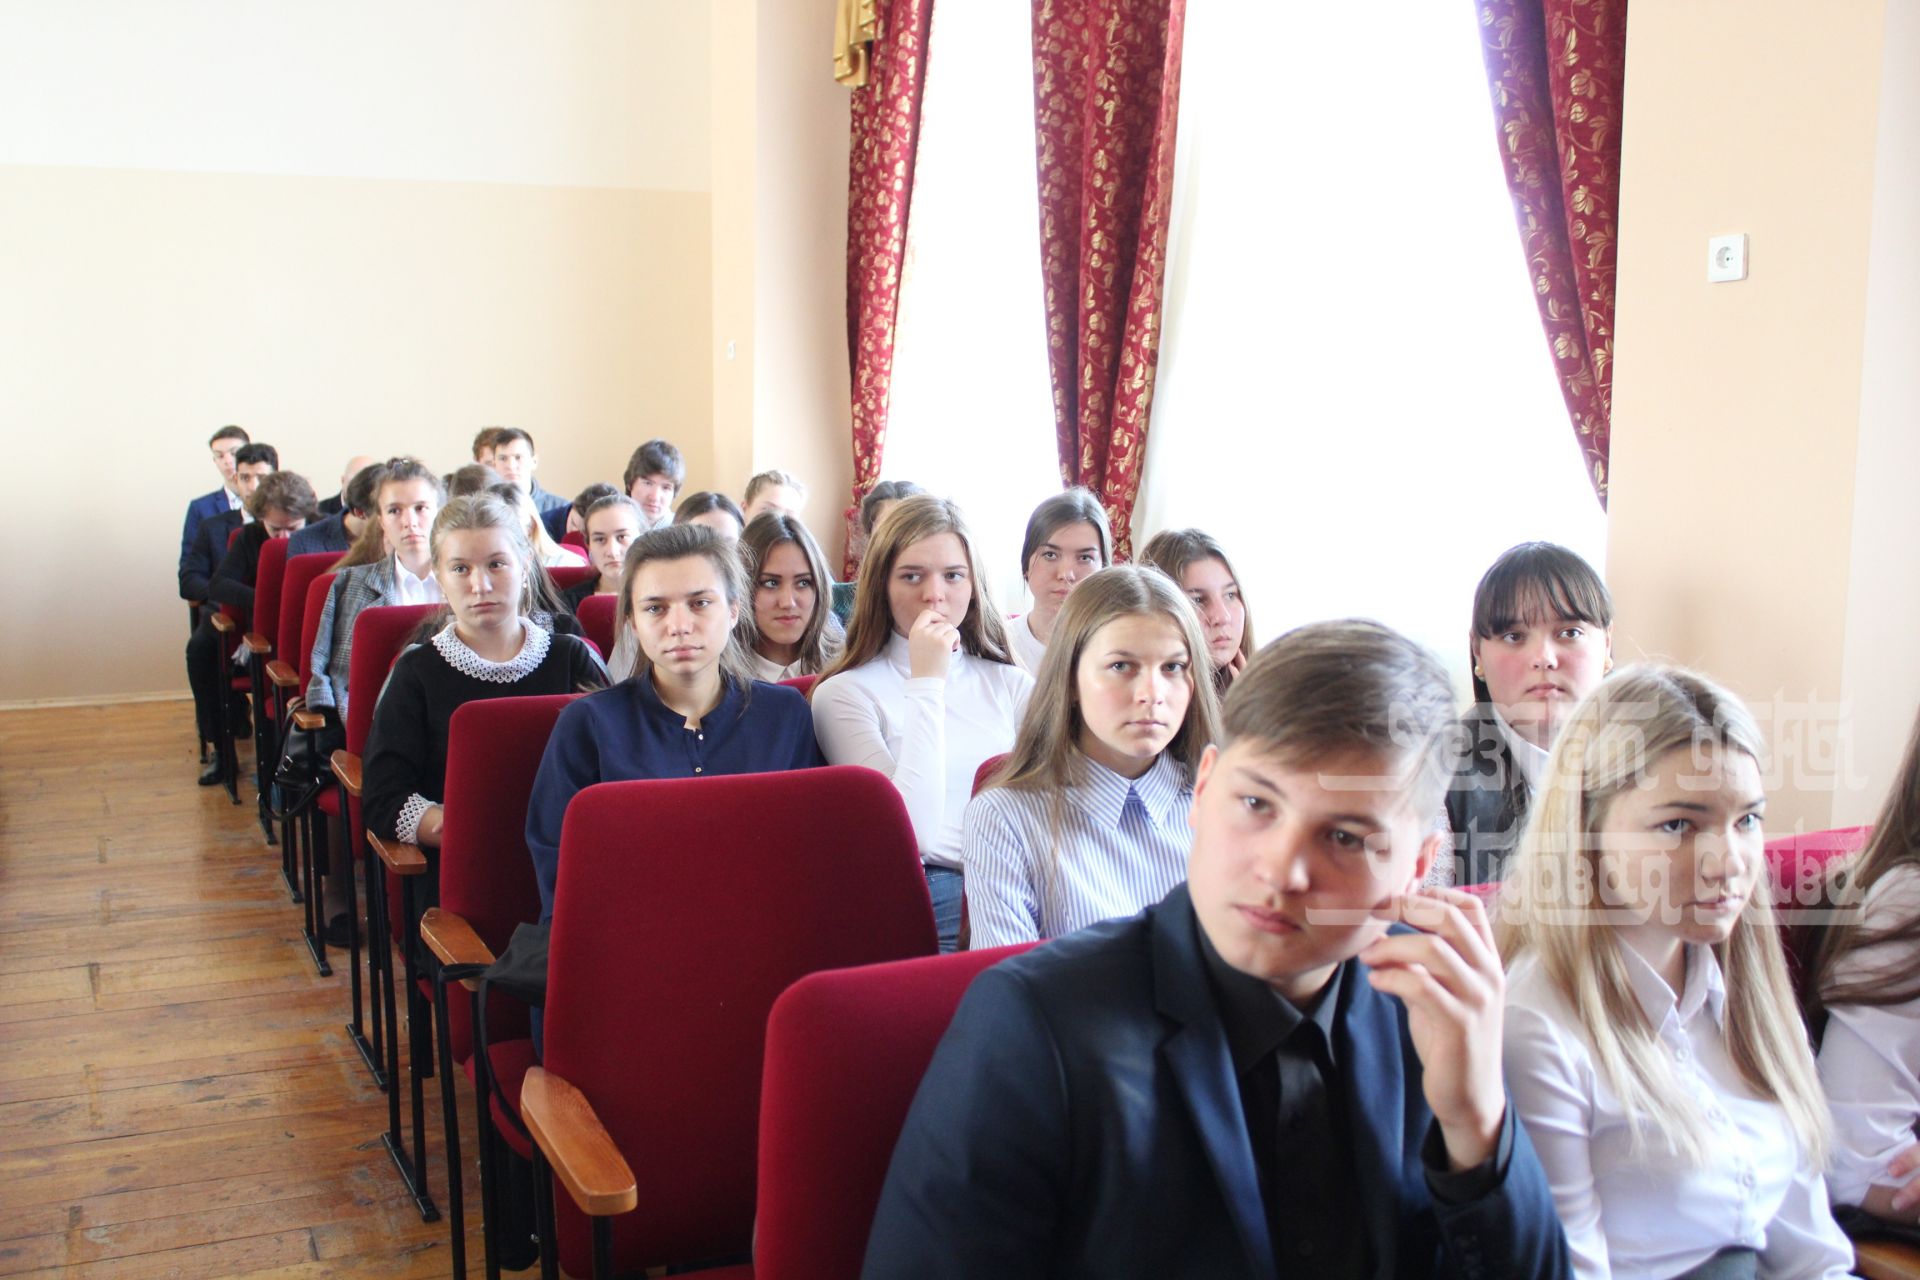 Фото: Римма Ратникова провела парламентский урок для школьников Кукмора